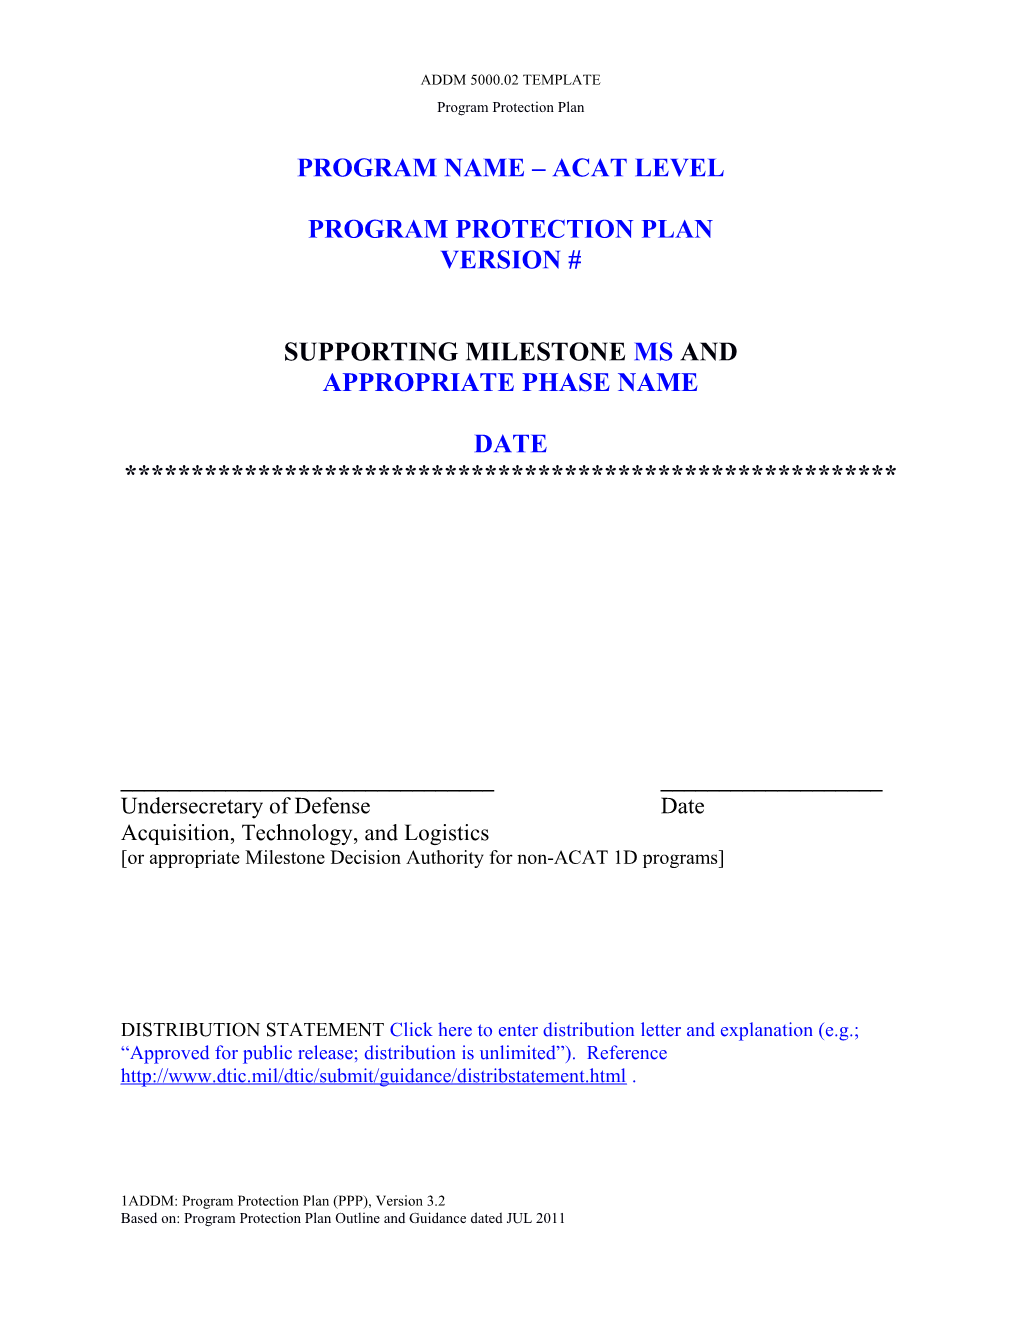 Program Protection Plan PPP - ADDM Template V 3.2